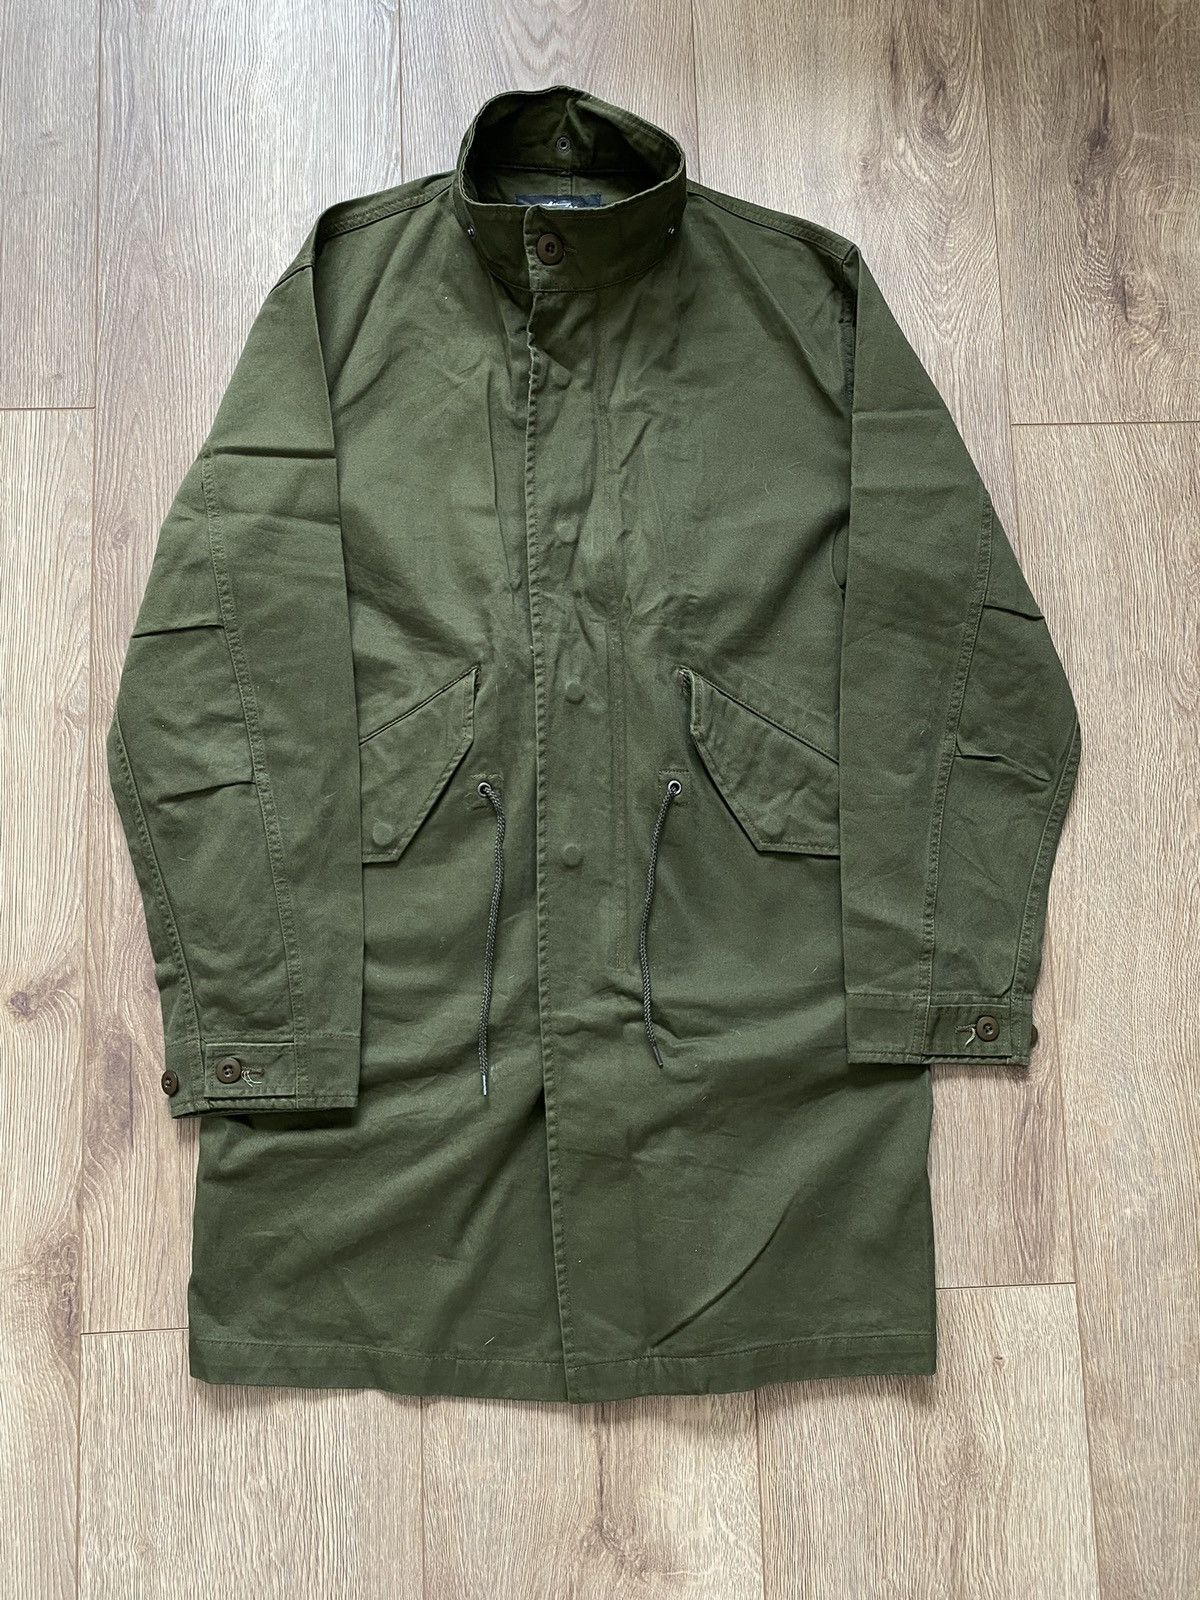 Stussy Stussy Fishtail military parka jacket | Grailed